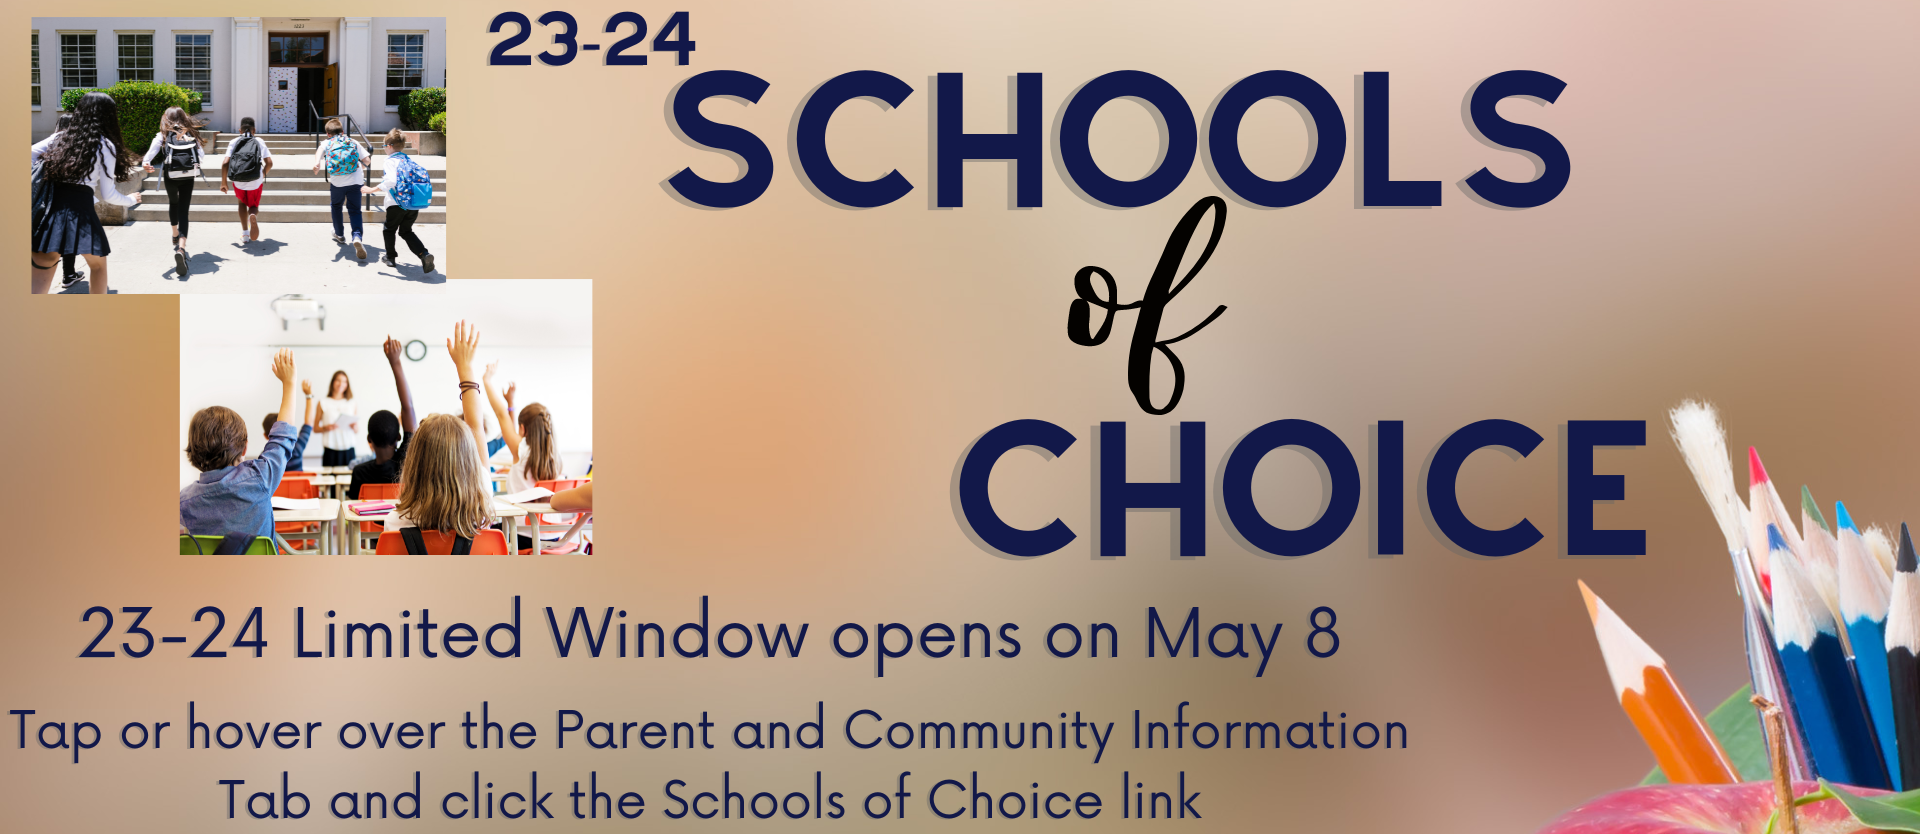 Schools of Choice Flyer